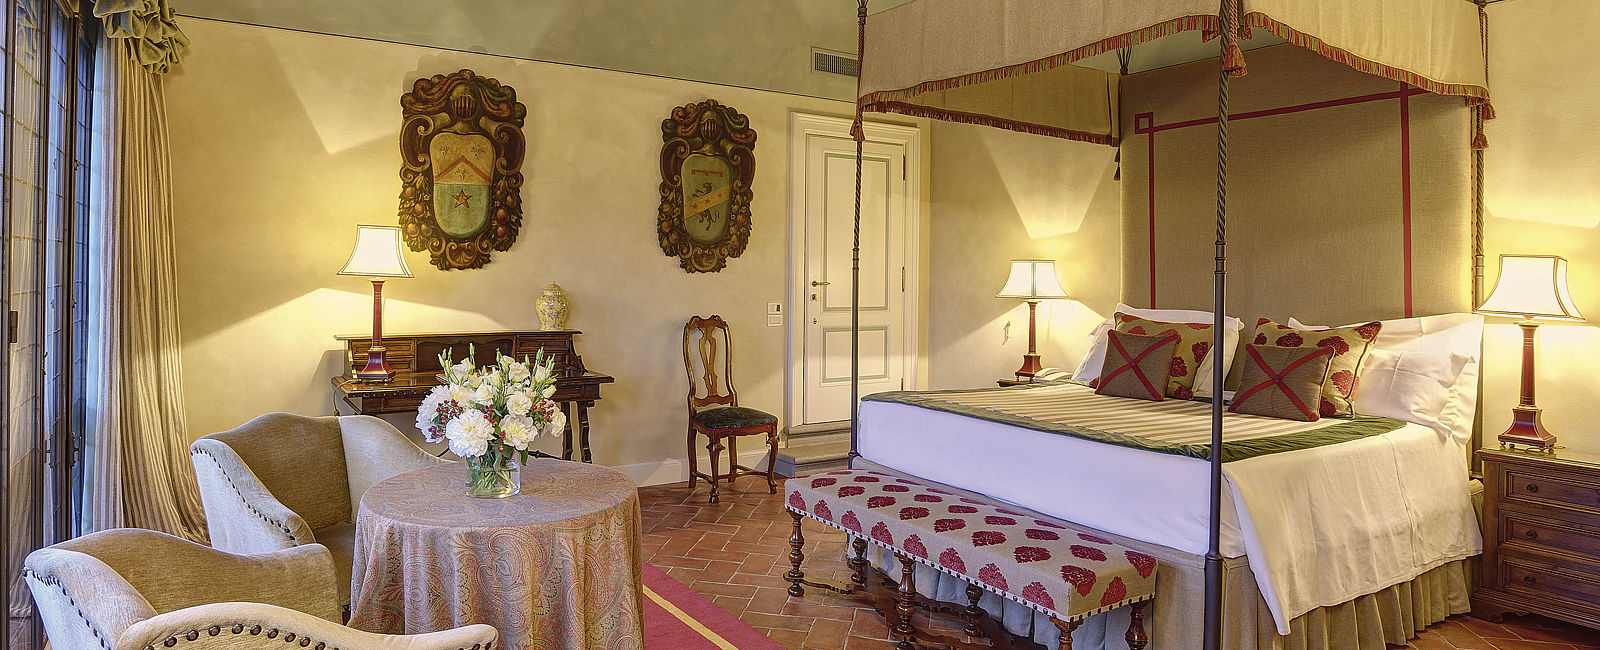 HOTEL ANGEBOTE
 Villa La Massa: Stay for Longer 3×2 
